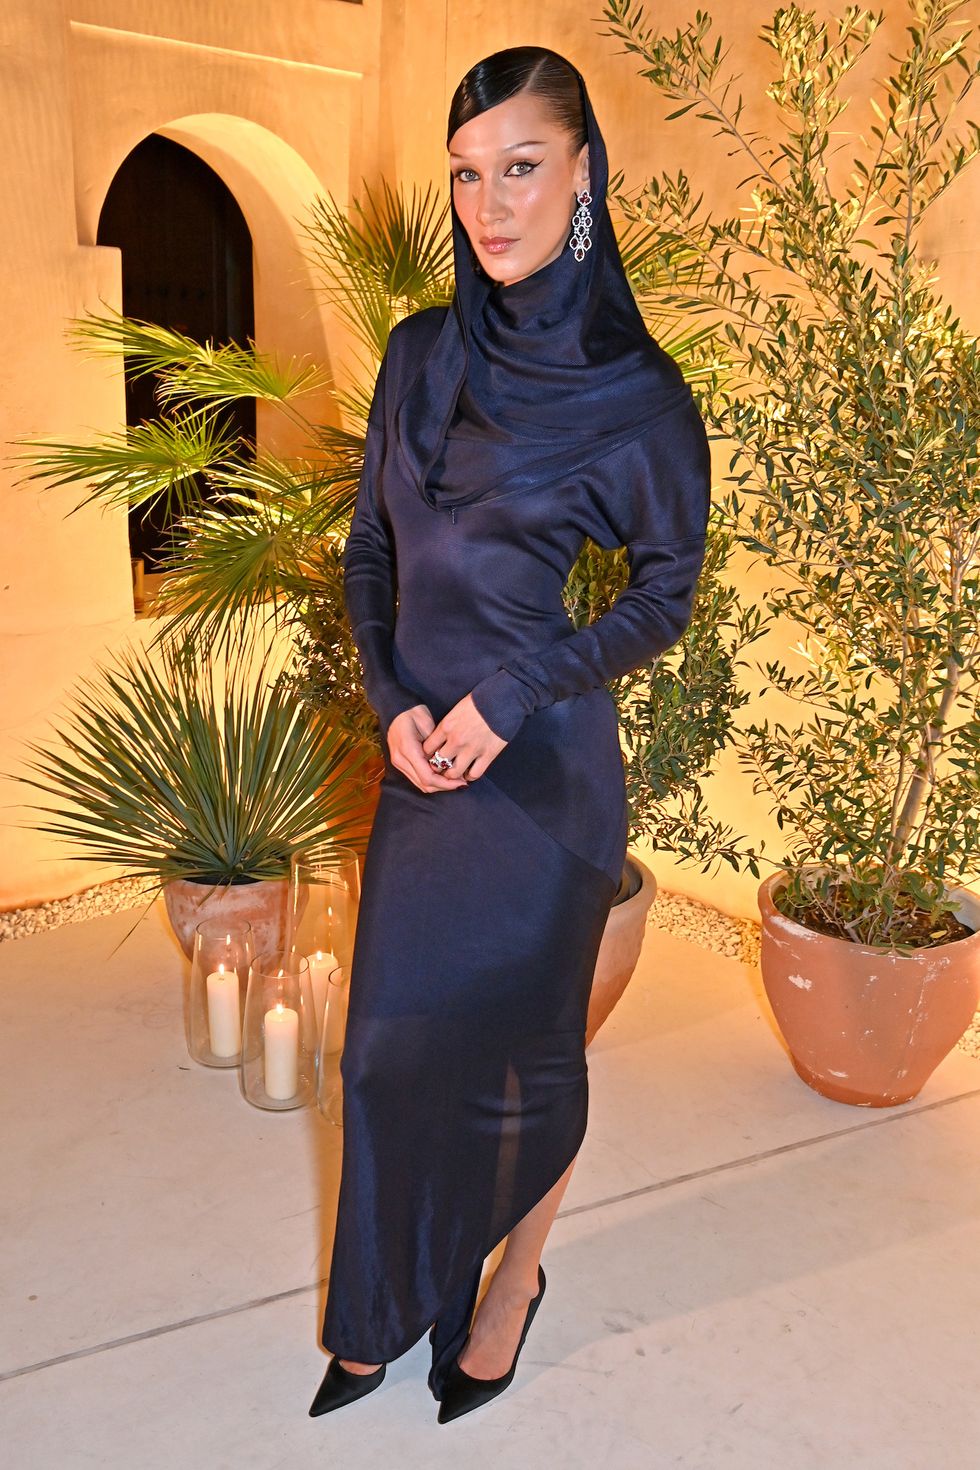 Bella Hadid Emulates Old Hollywood Glamour in Qatar